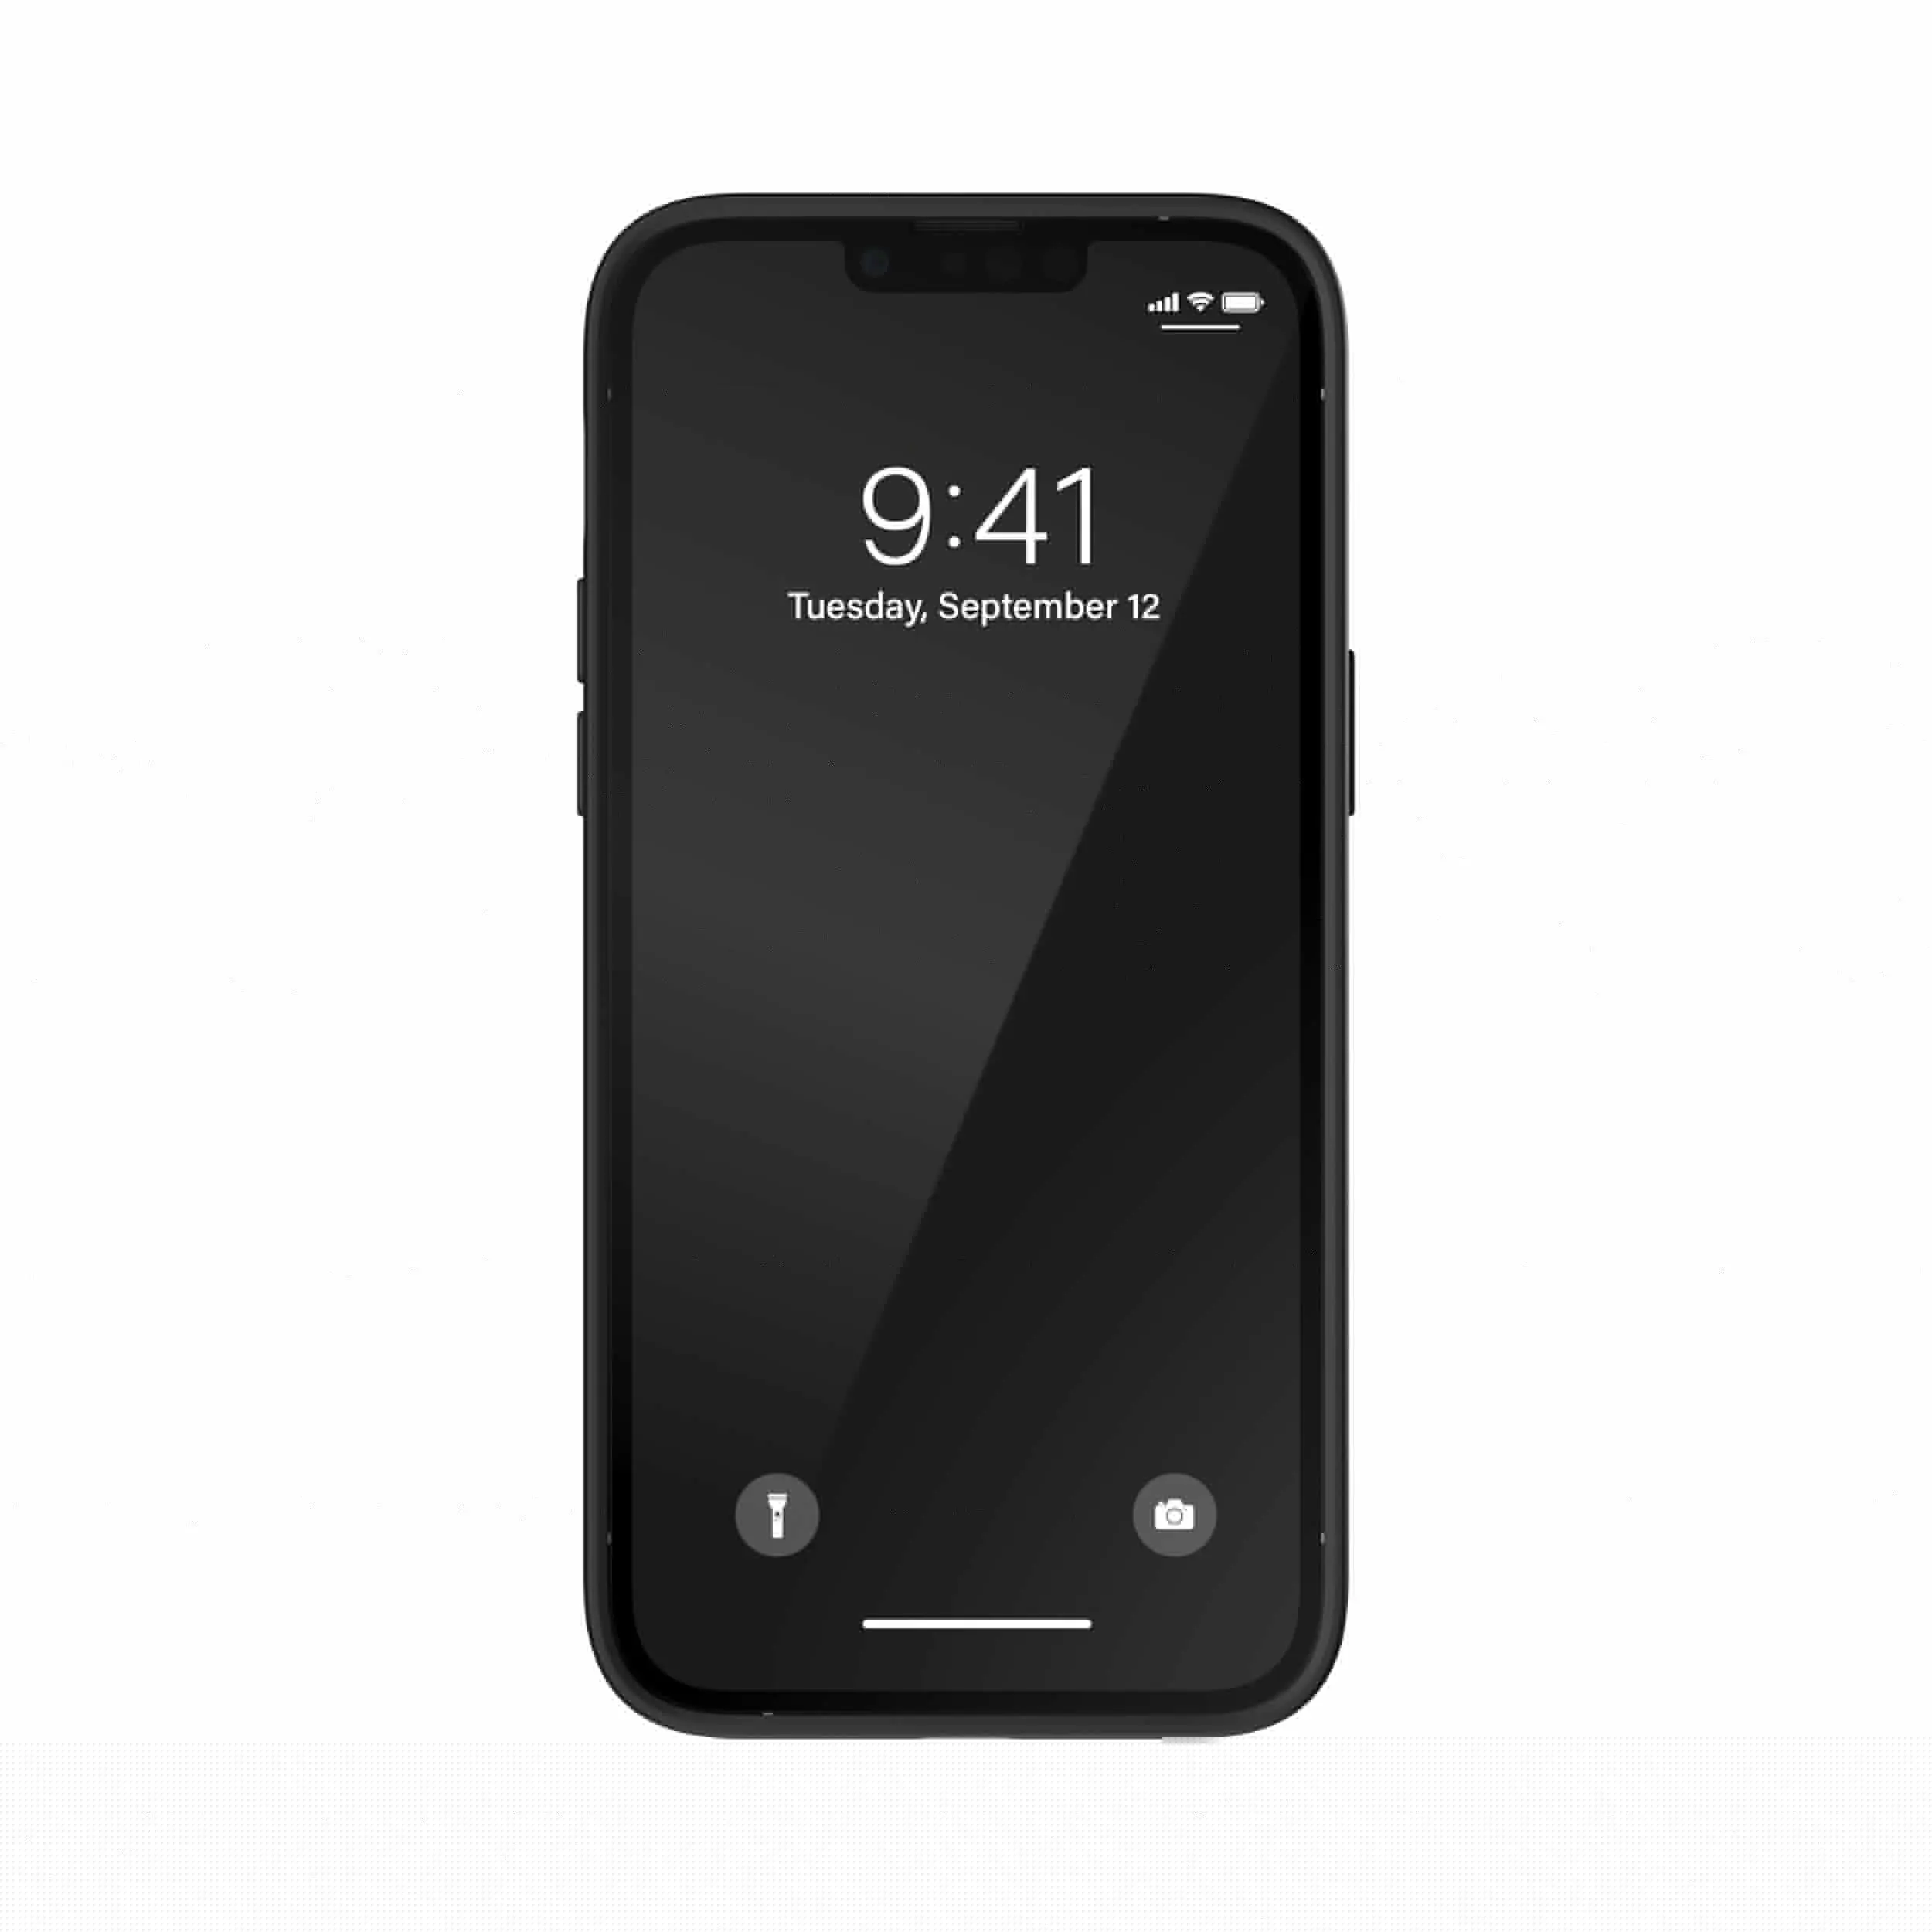 Adidas รุ่น Moulded Case PU - เคส iPhone 14 Pro Max - สี White/Black